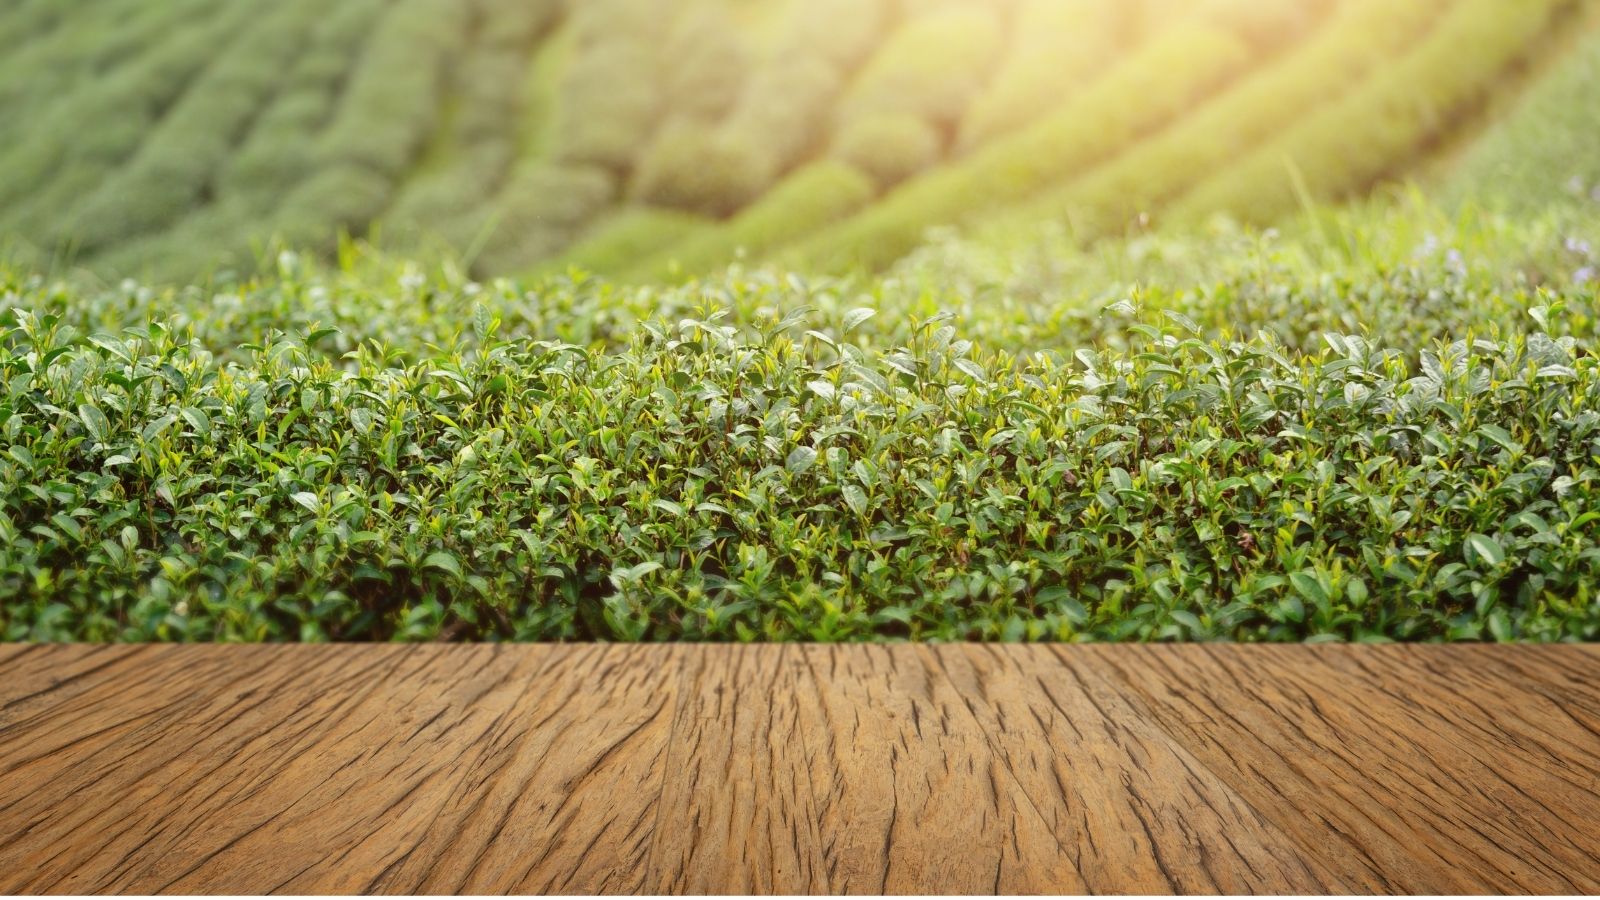 Health Benefits of Green Tea - Why You Should Drink Green Tea